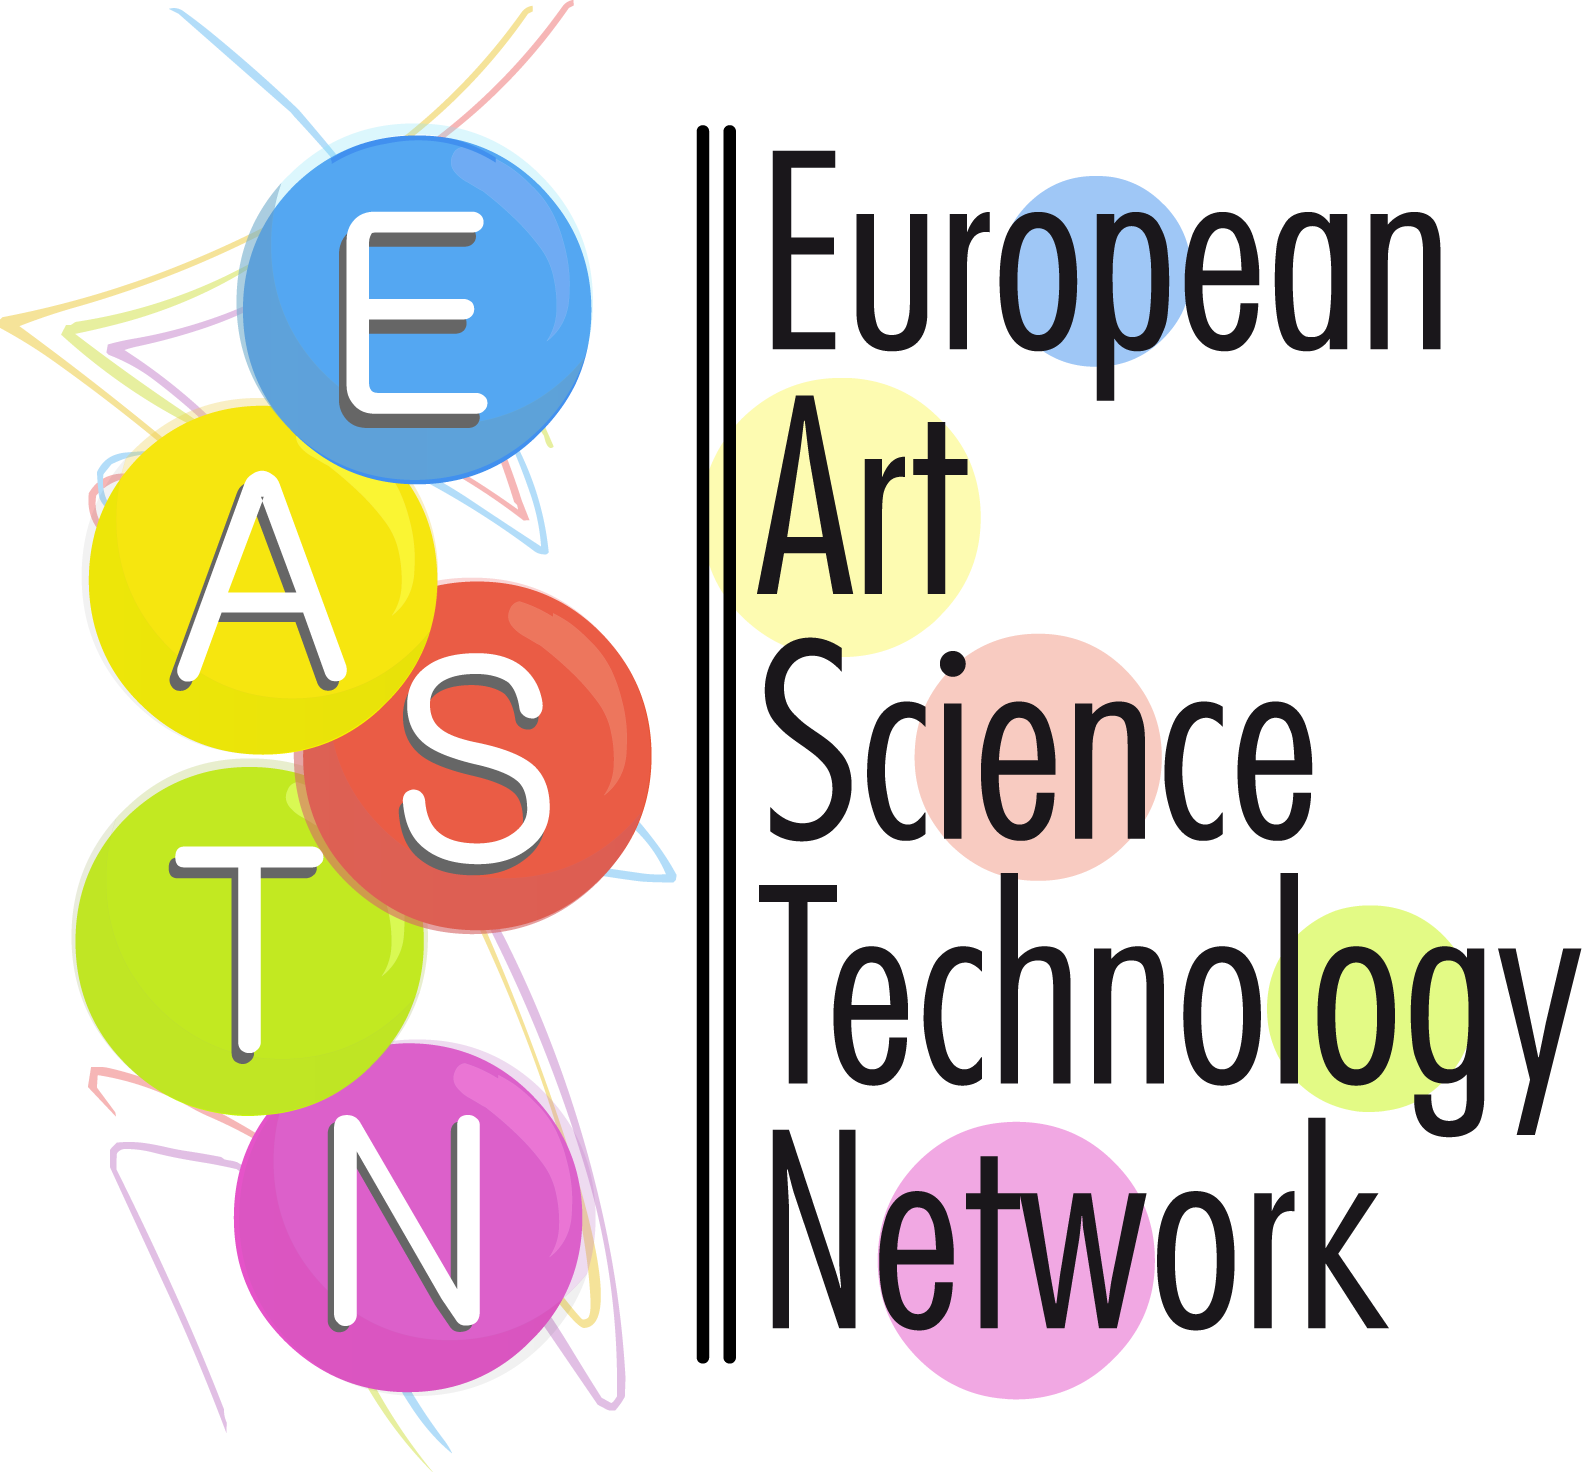 European Art Science Technology Network